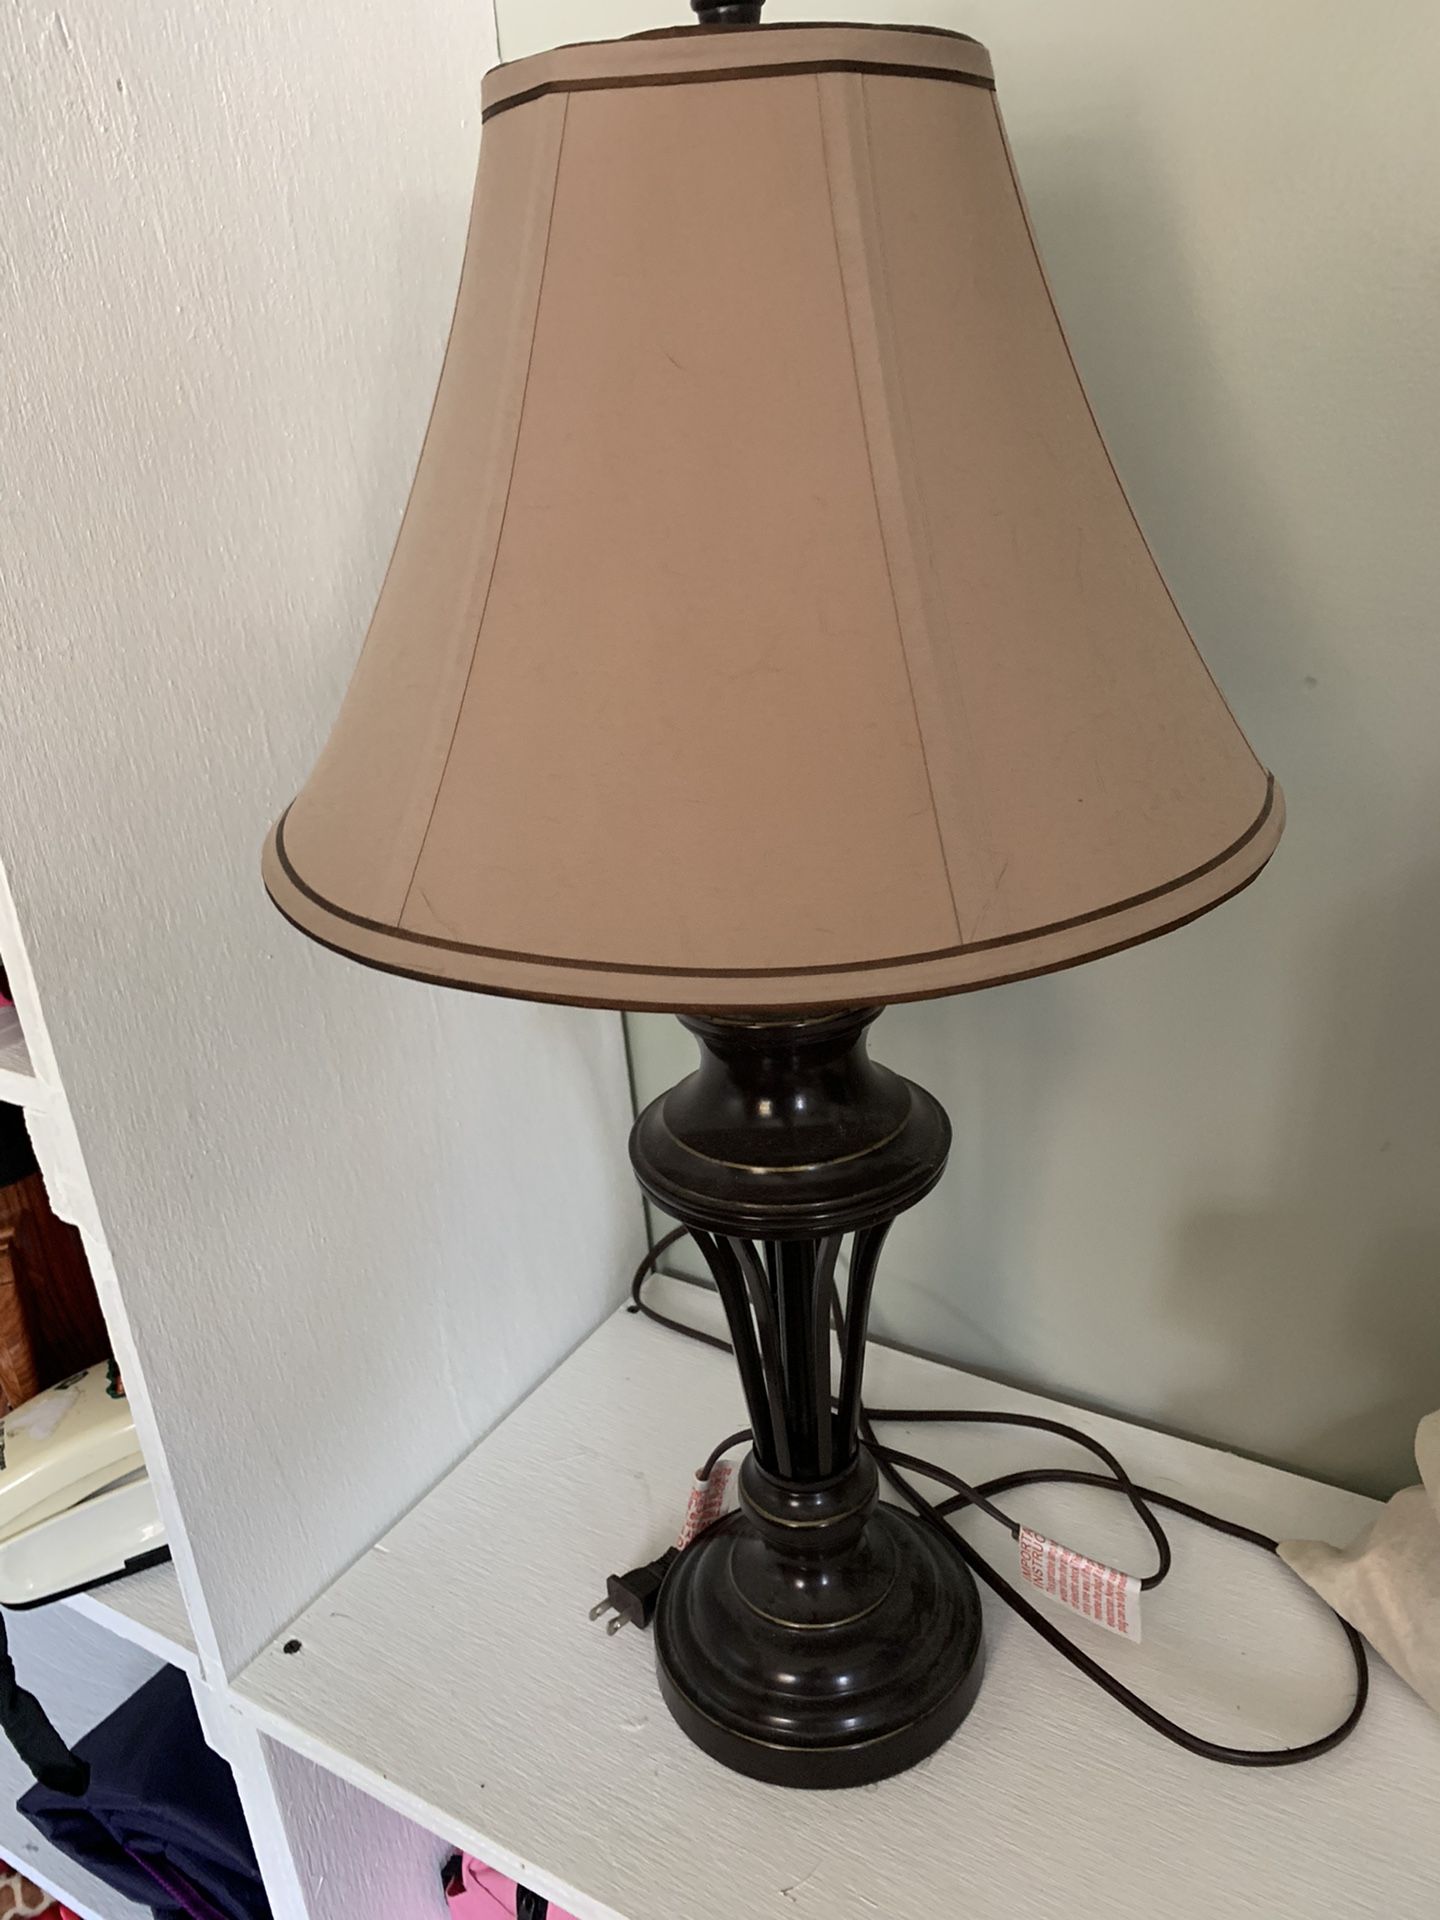 Lamp Set